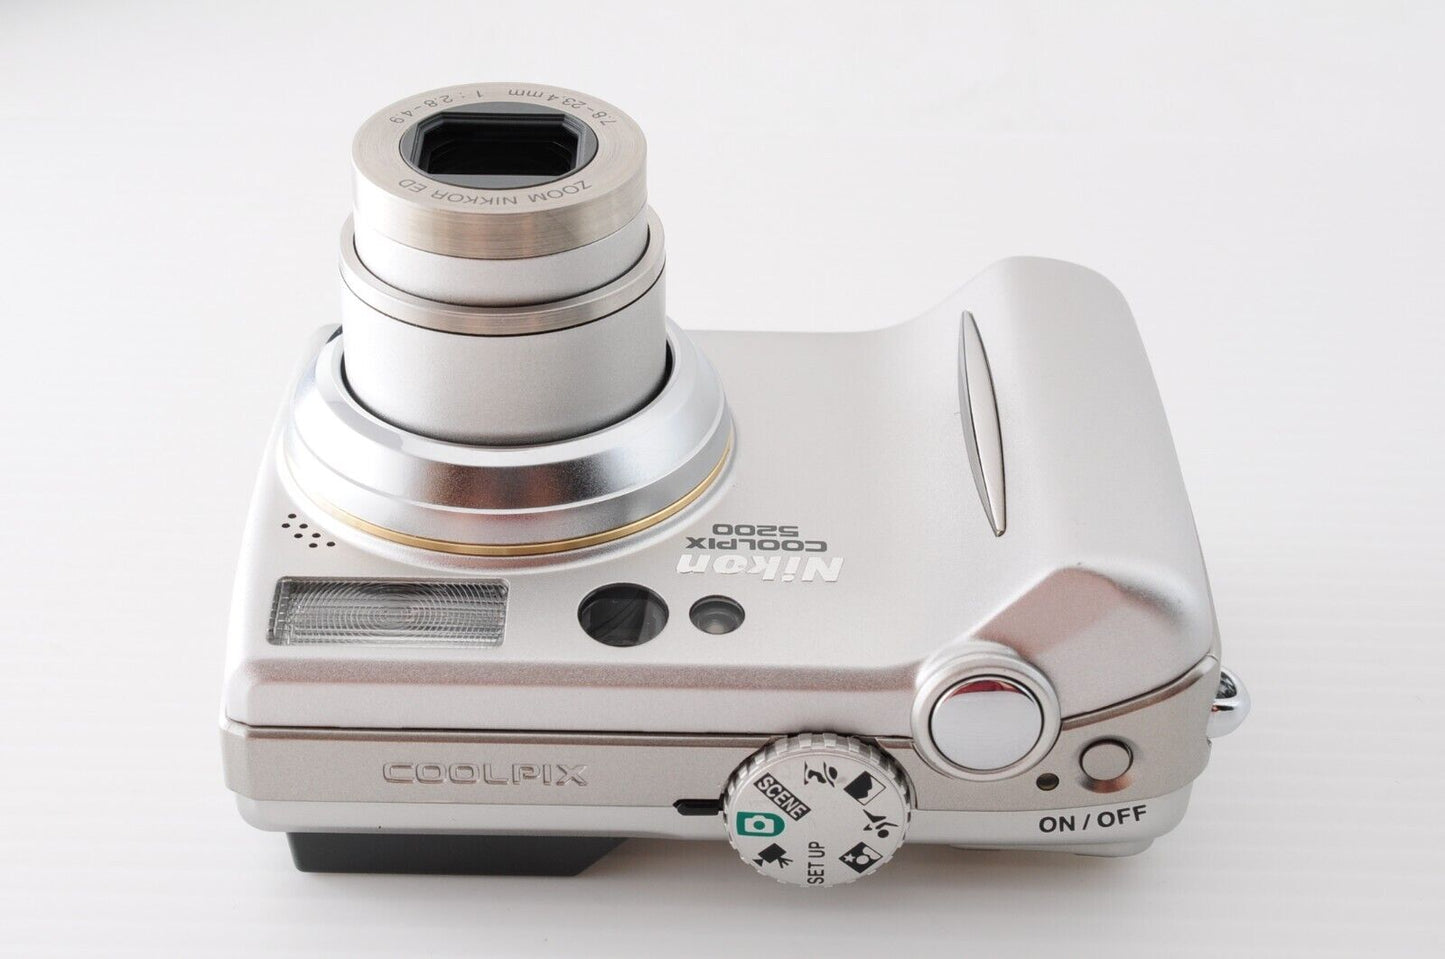 NIKON COOLPIX E5200 Silver  Point & Shoot Digital Camera from Japan #7167